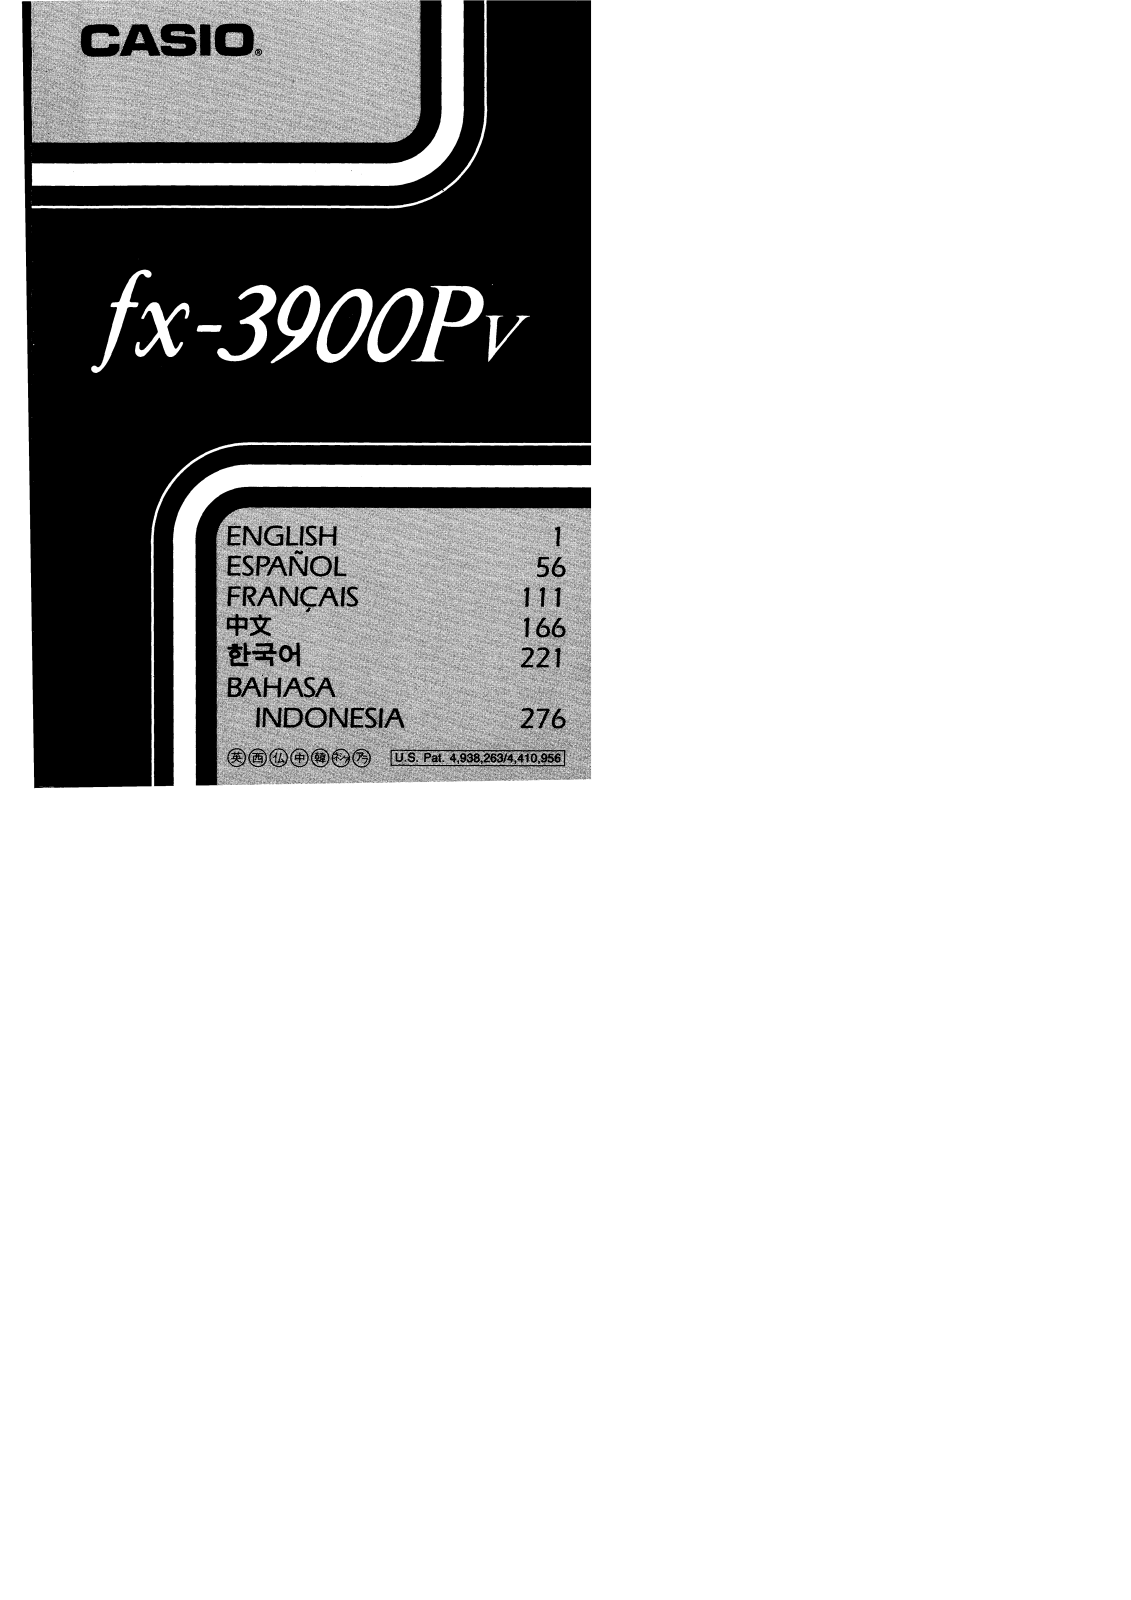 CASIO FX-3900P User Manual